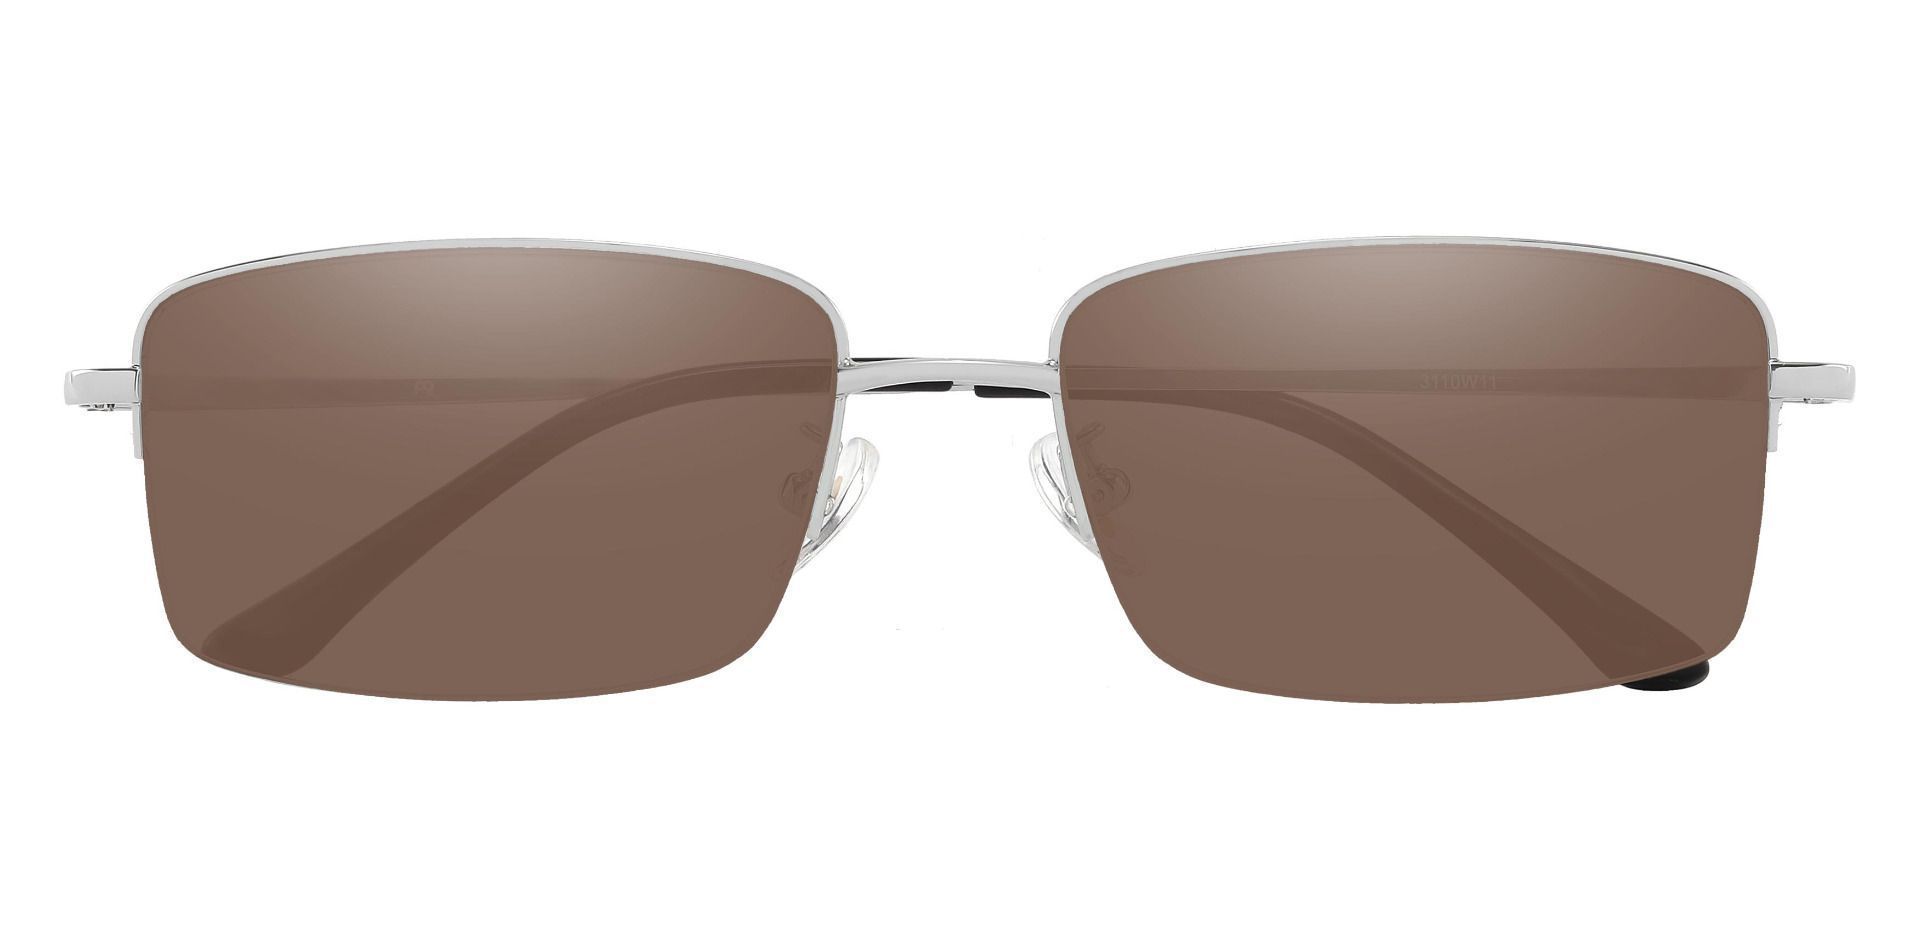 Bellmont Rectangle Prescription Sunglasses - Silver Frame With Brown Lenses